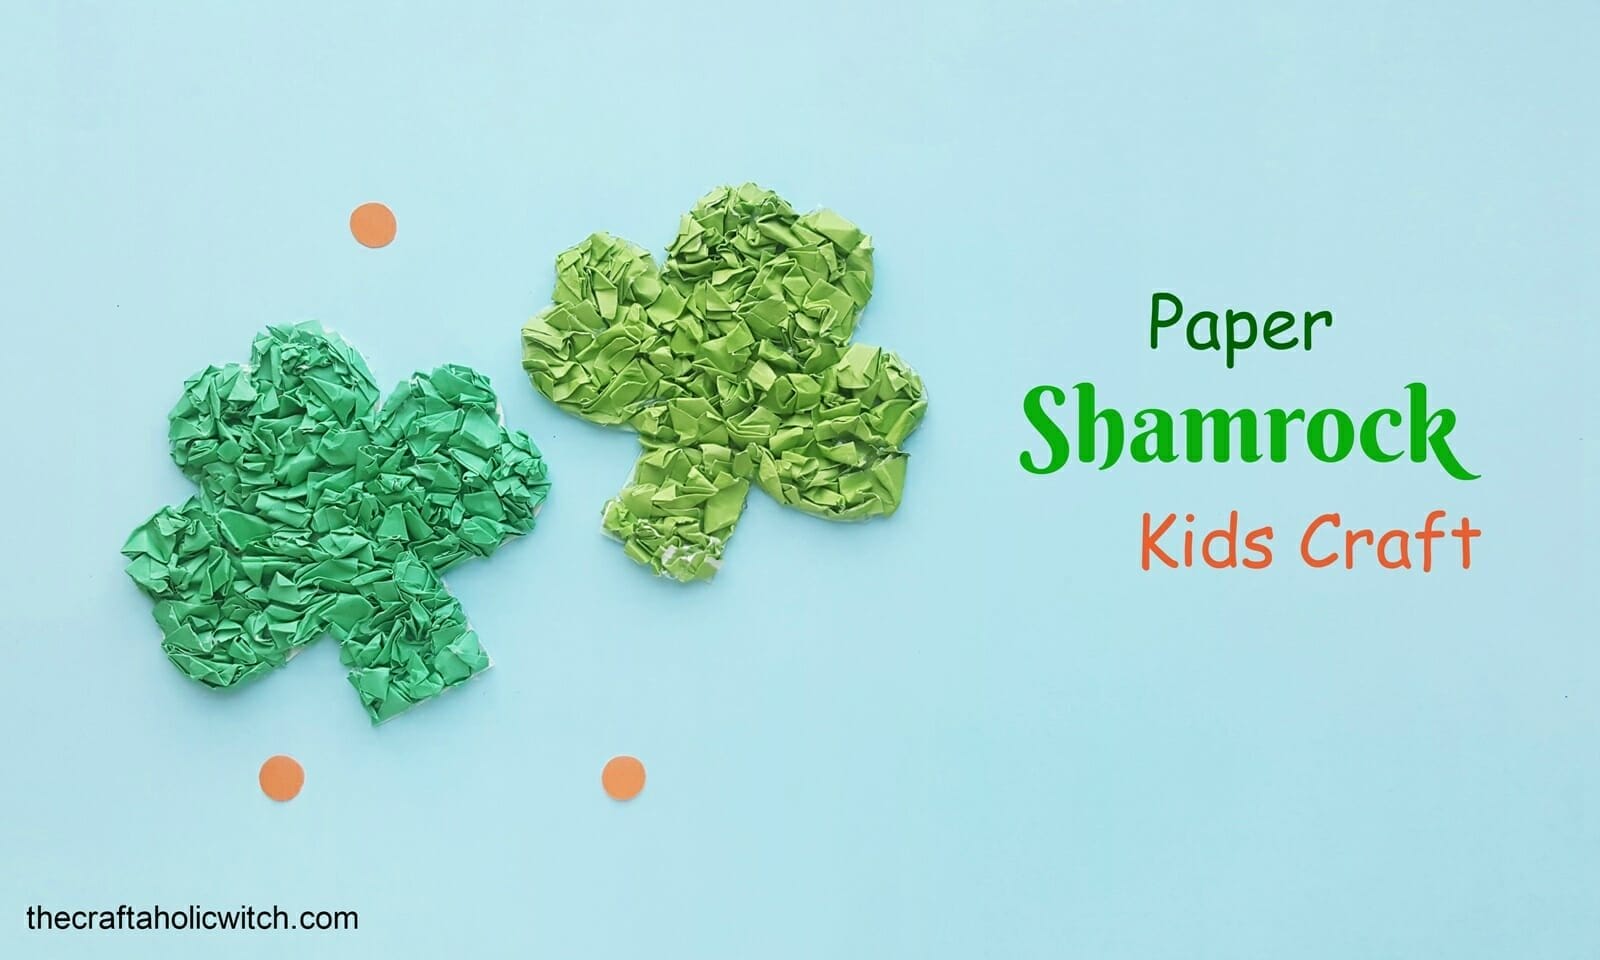 Paper Shamrock kids craft